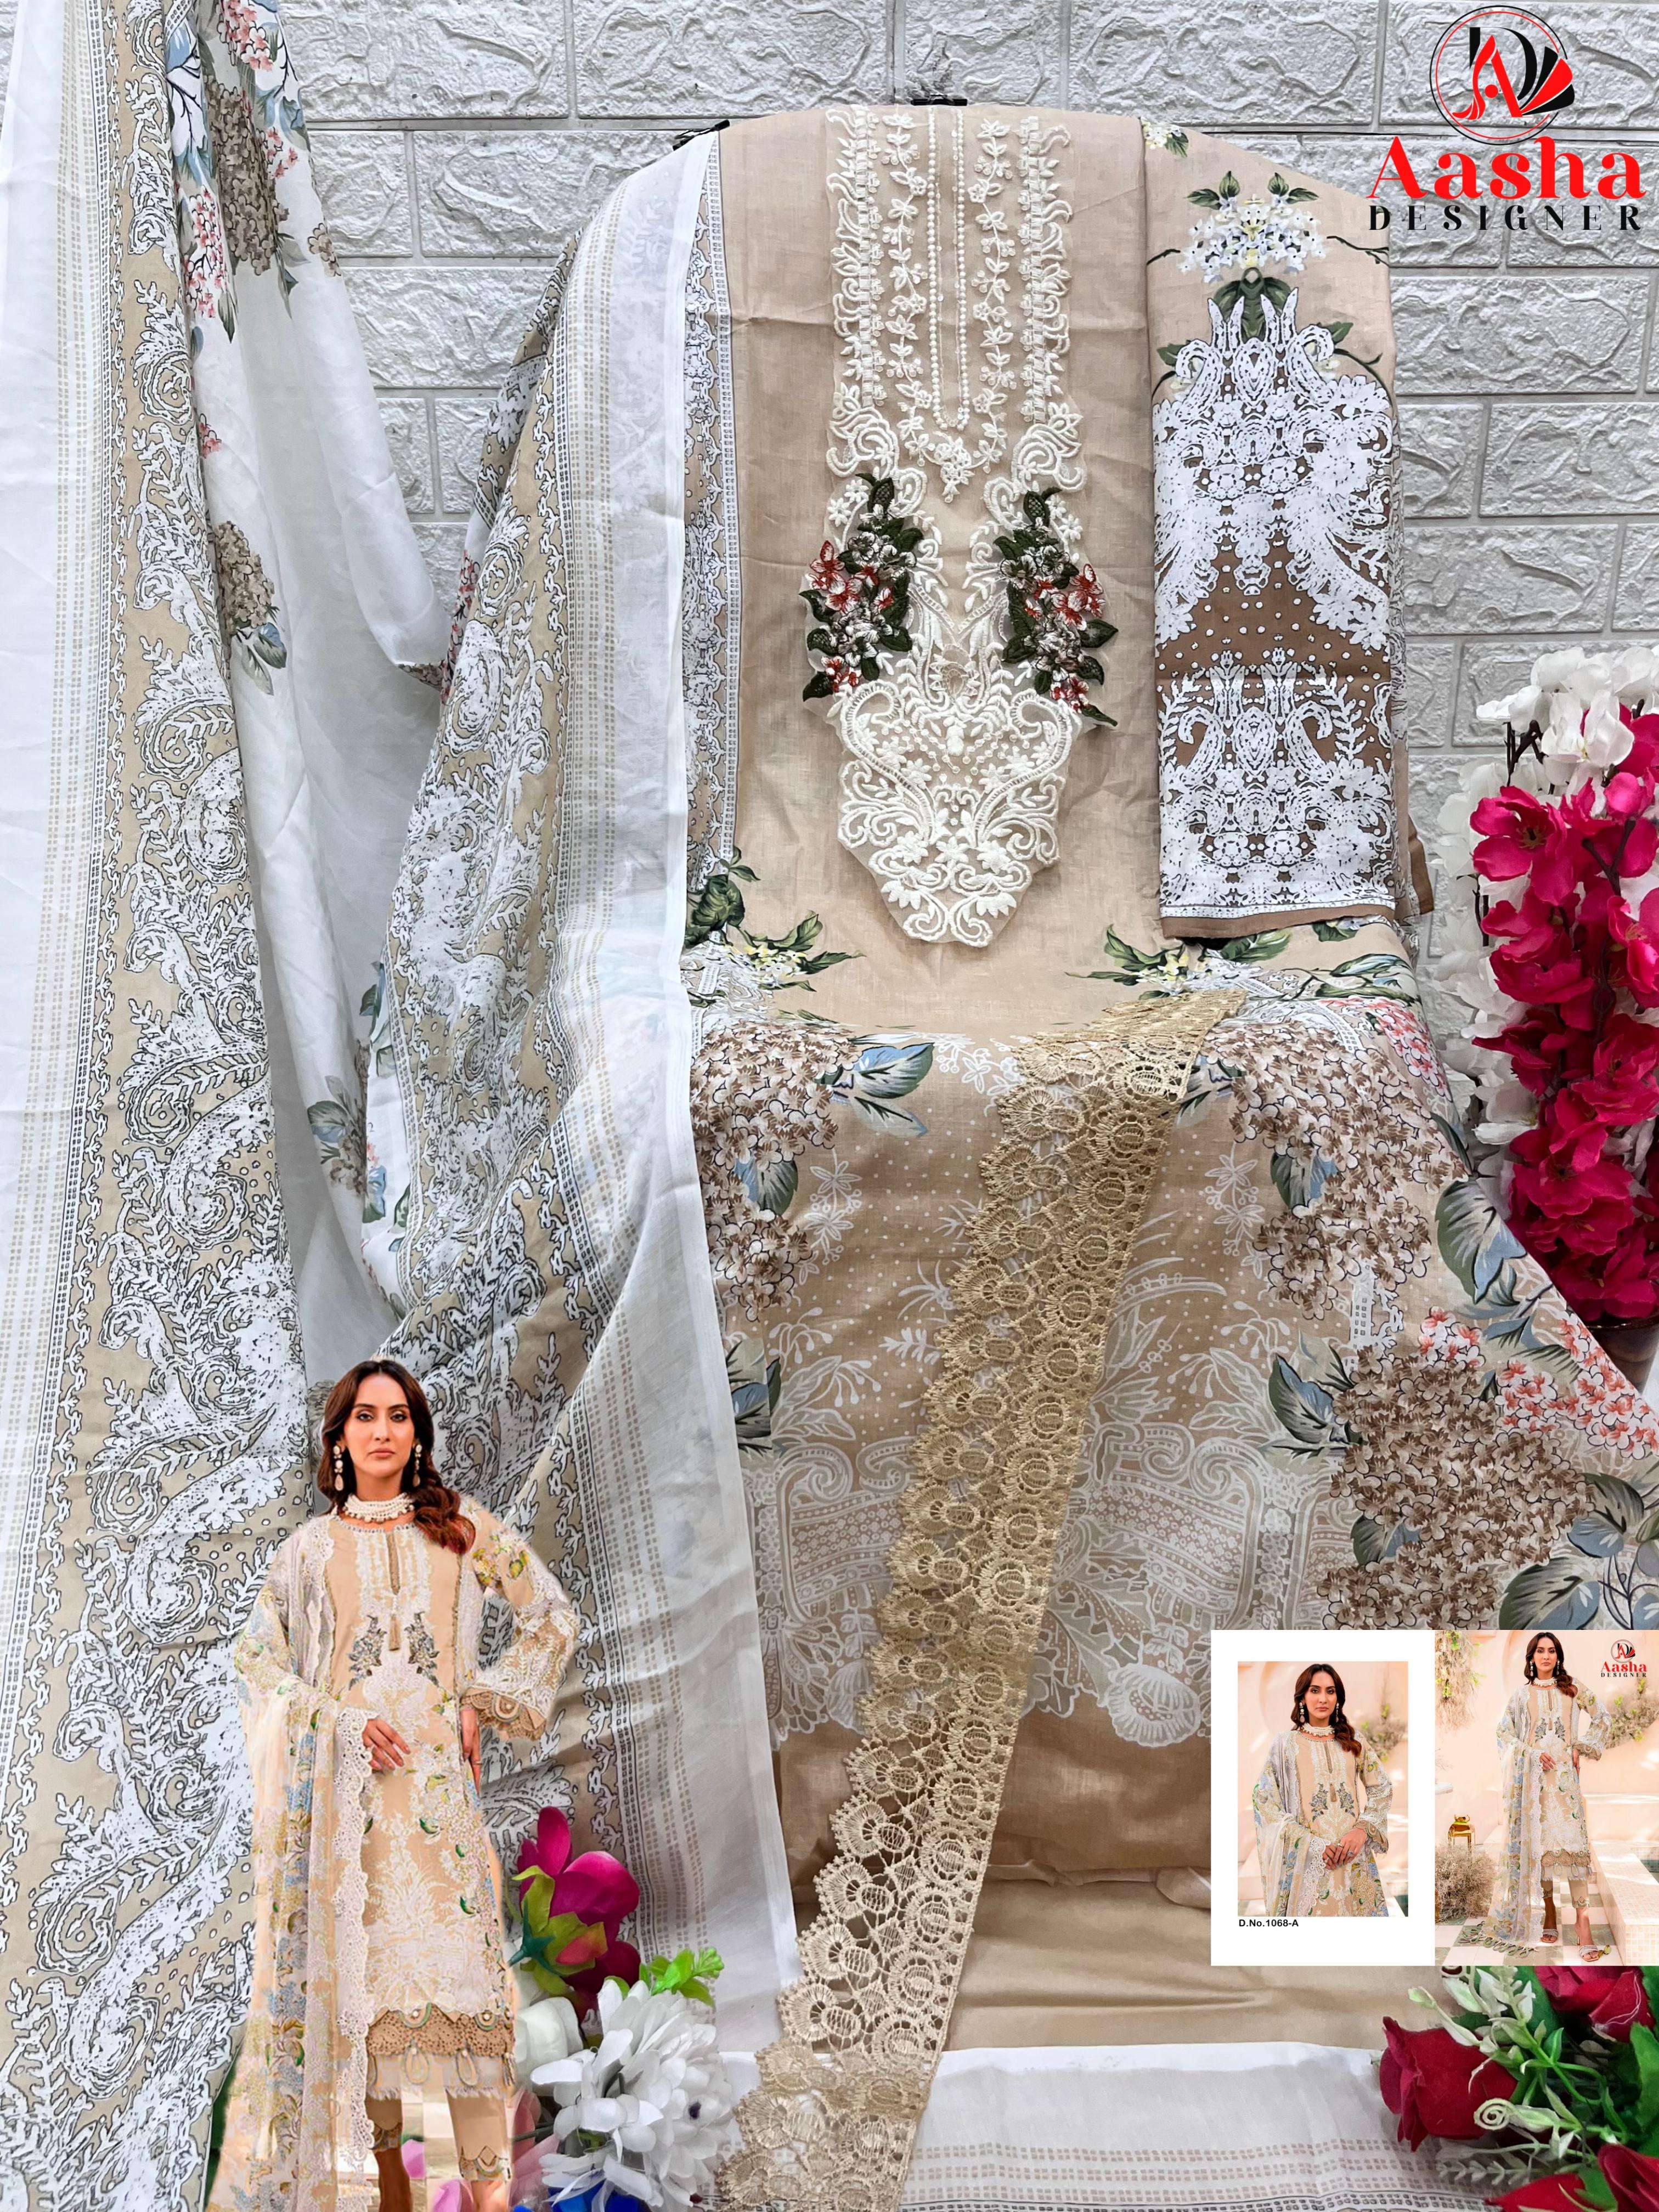 Aasha Needle Wonder Vol 7 Cotton Dupatta Salwar Suits Wholesale catalog